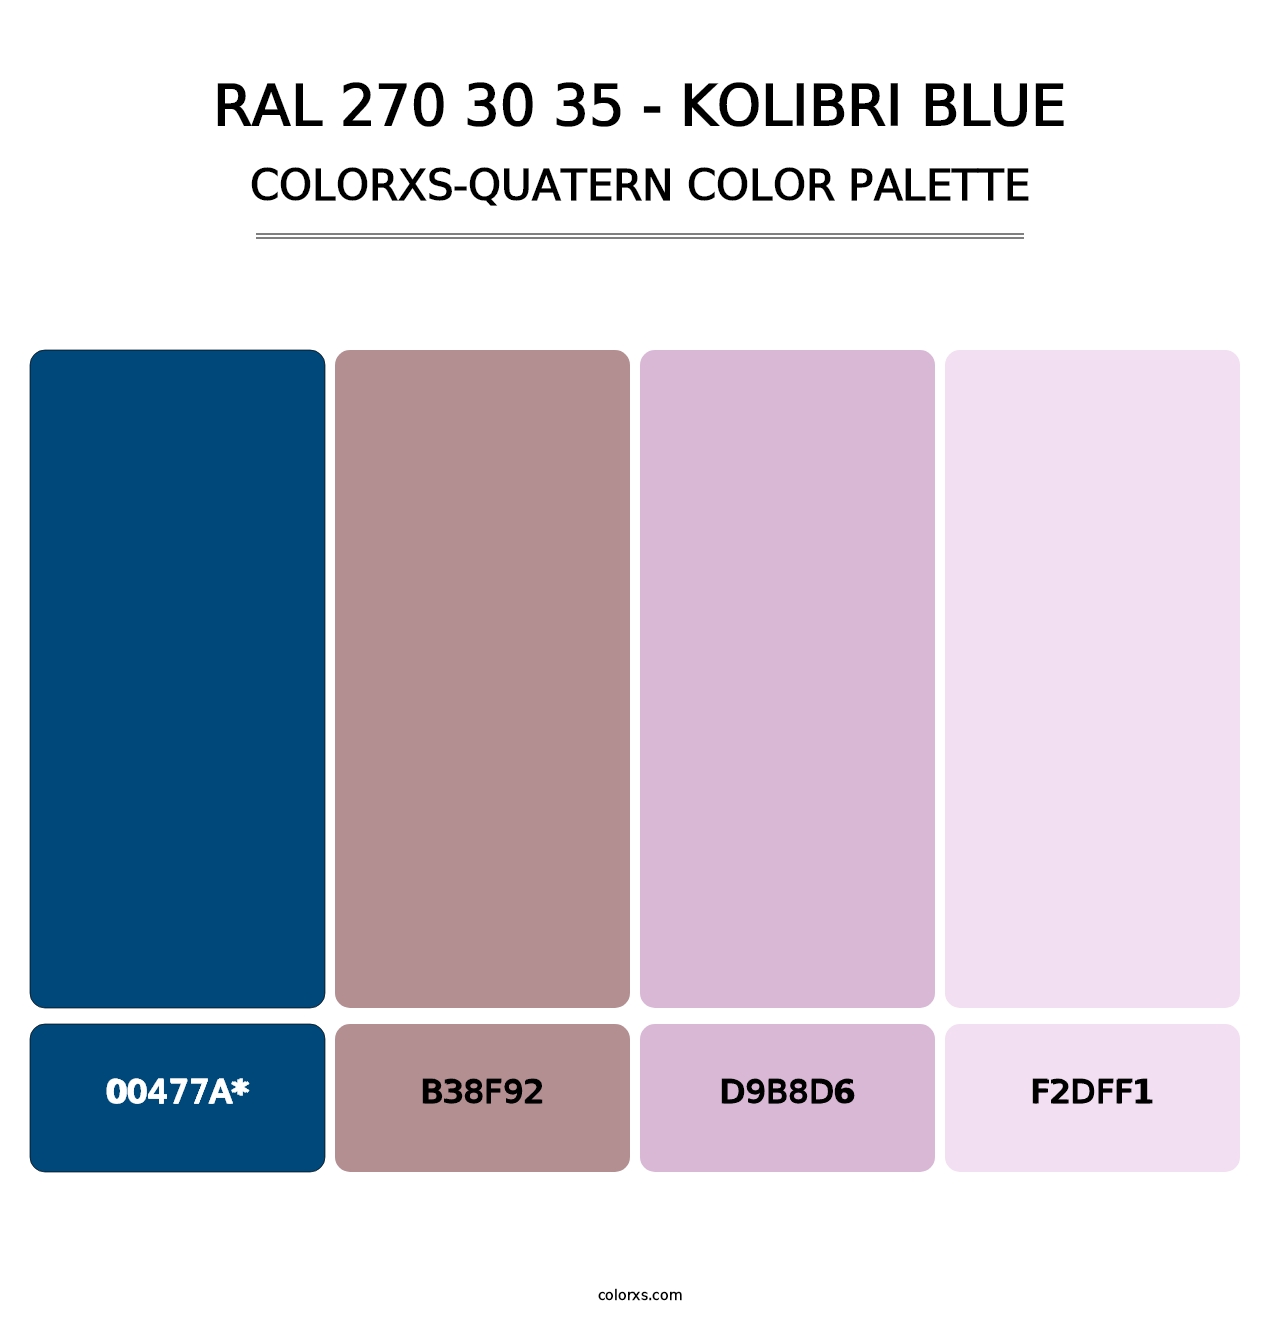 RAL 270 30 35 - Kolibri Blue - Colorxs Quatern Palette